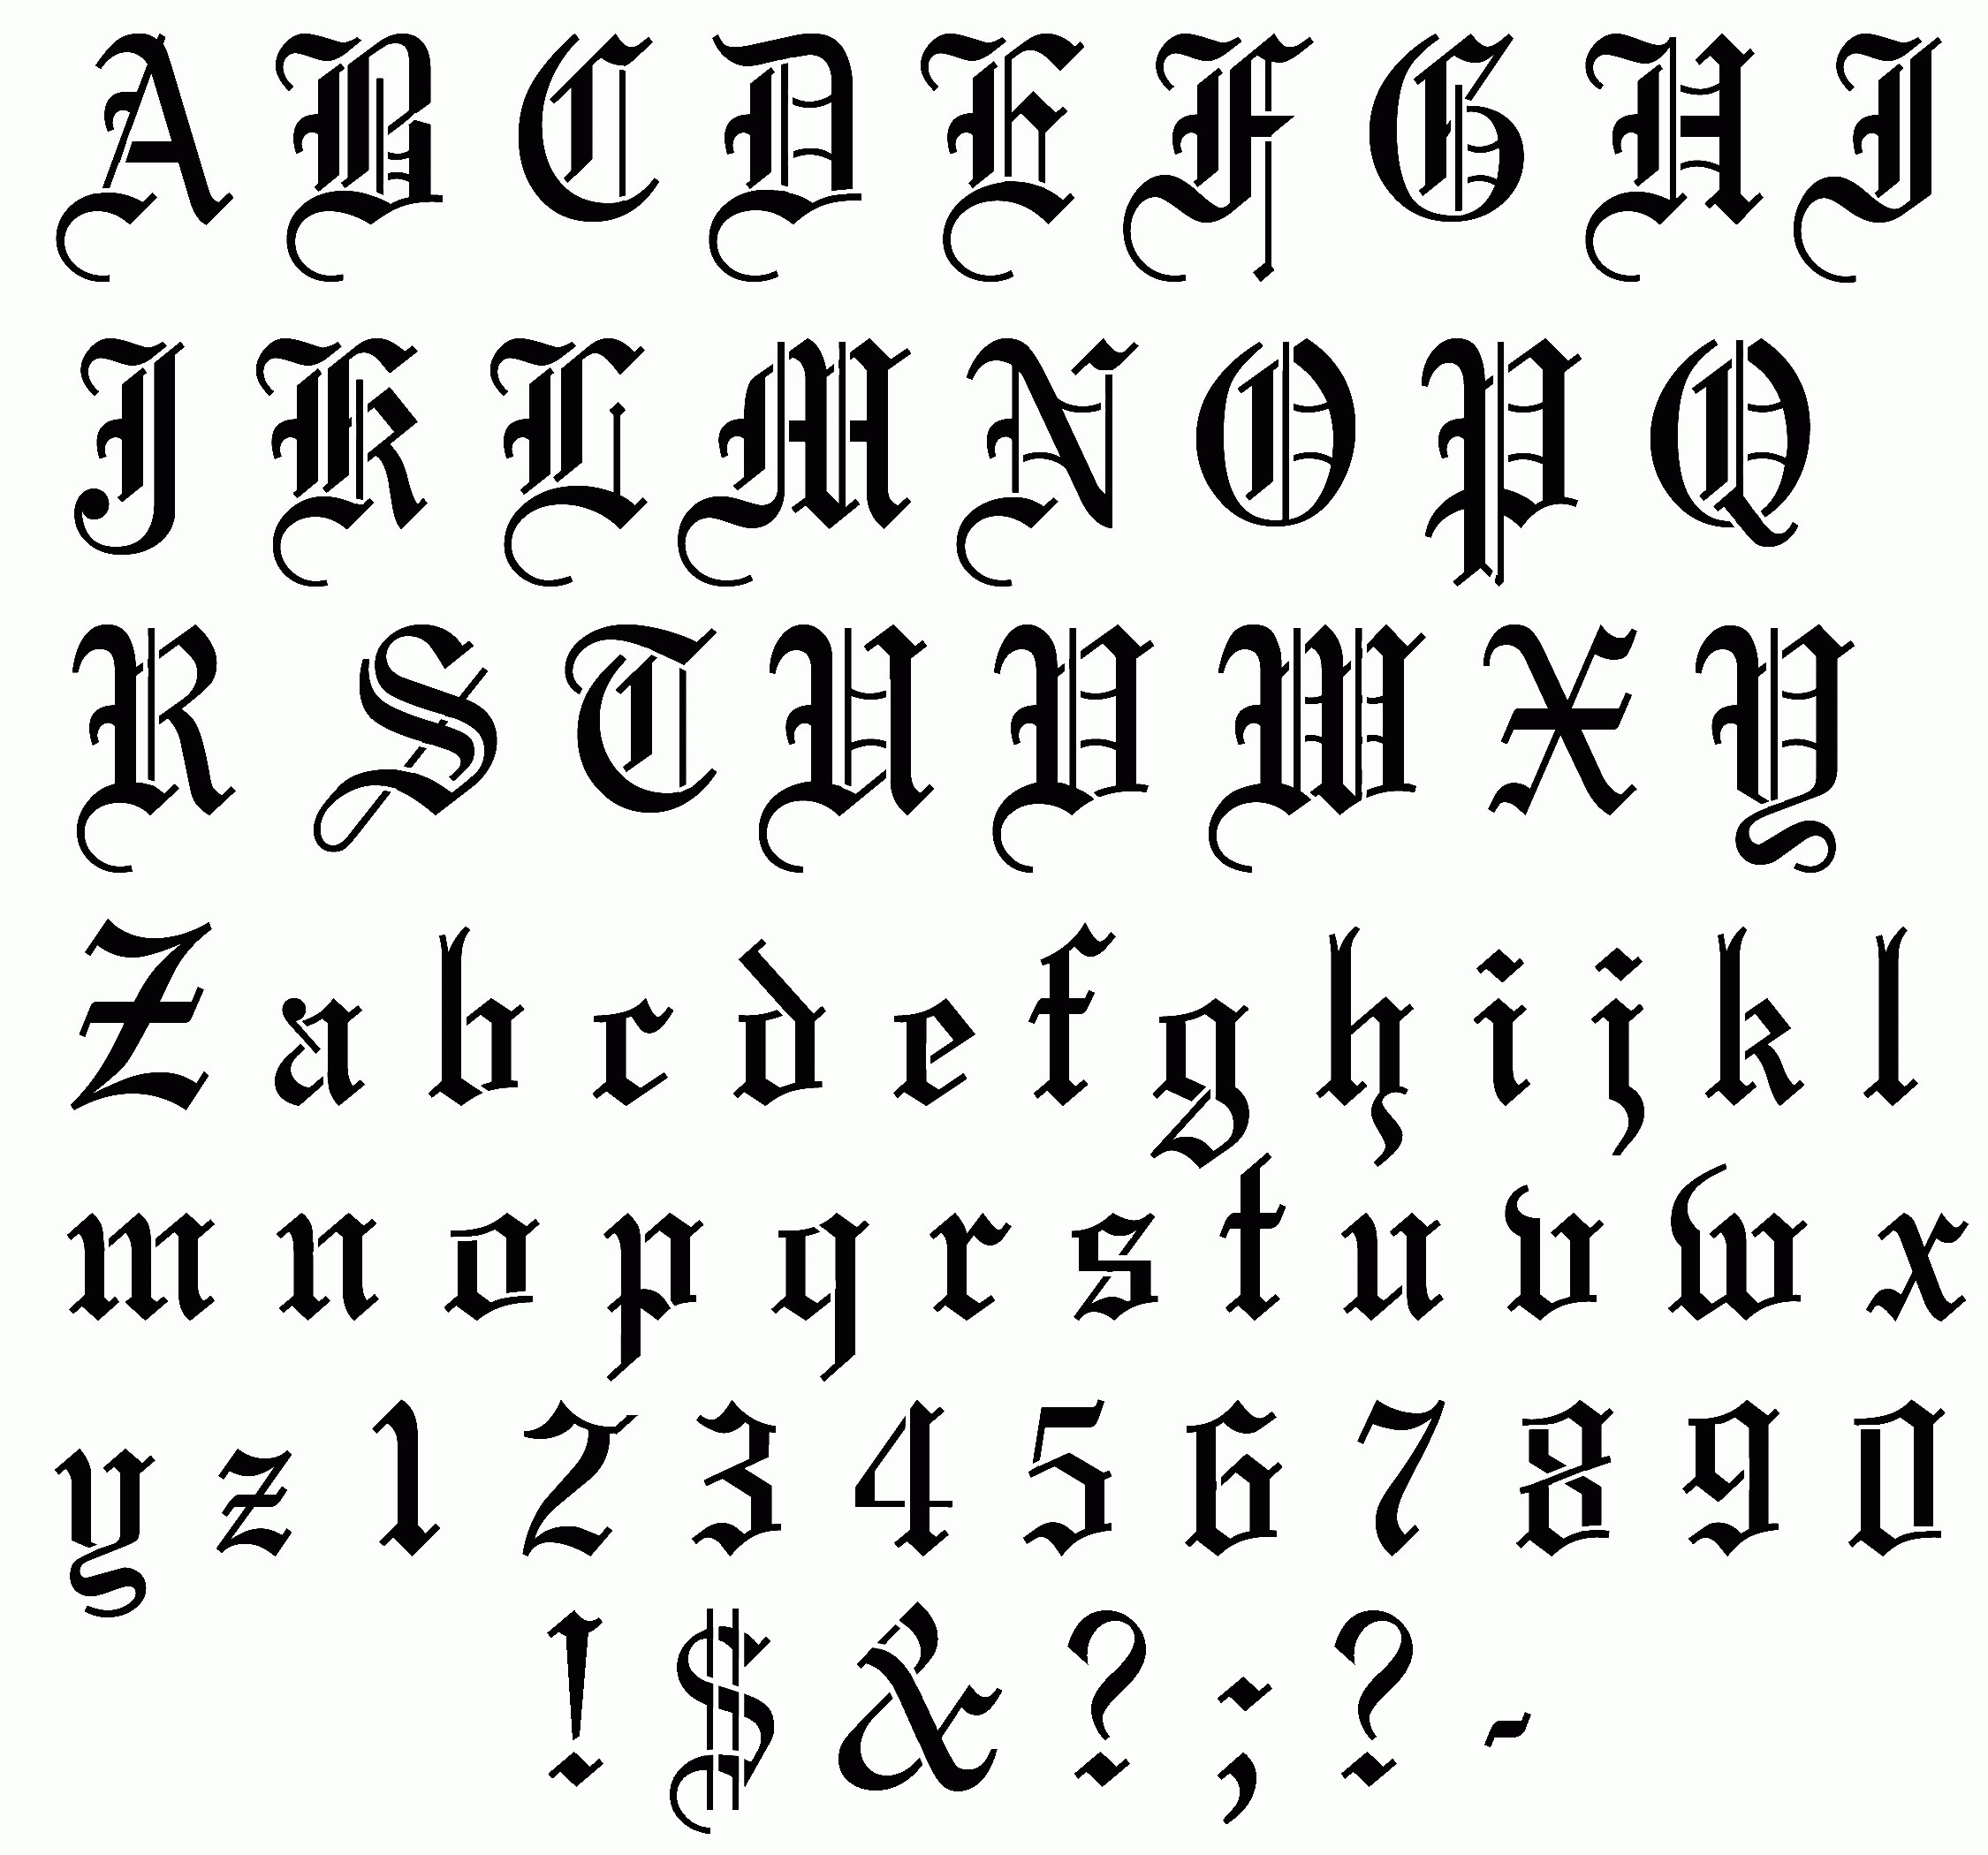 Free Printable Cursive Alphabet Letters | Design: Lettering - Free